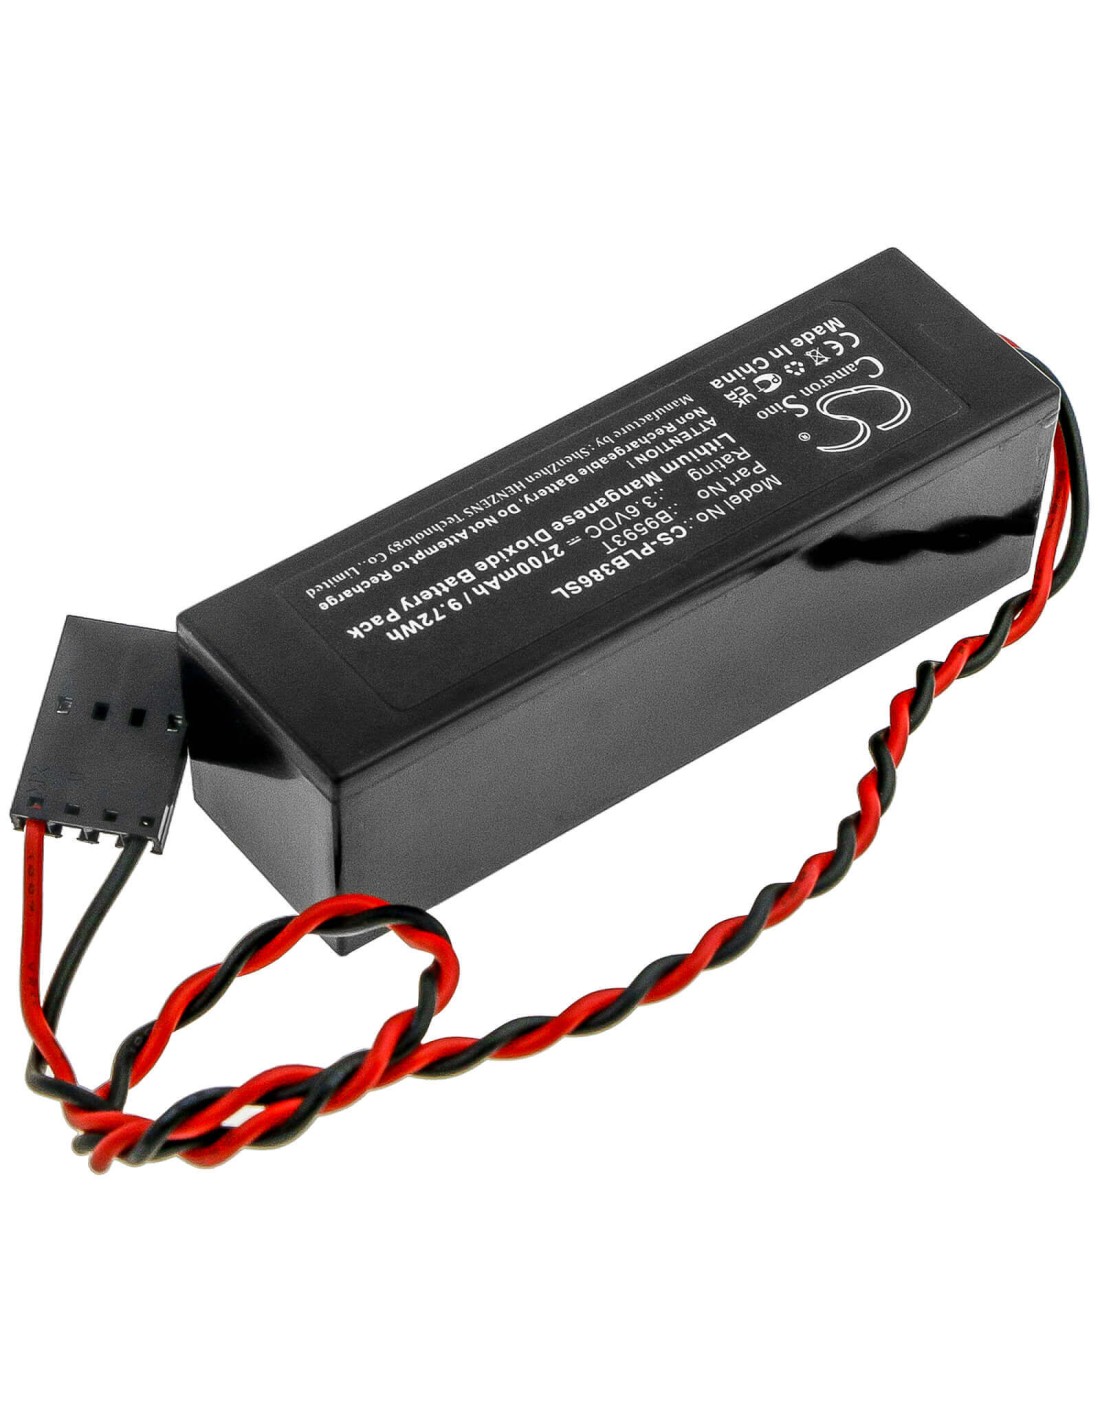 Battery for Club American, Technol 486, Technol At 3.6V, 2700mAh - 9.72Wh